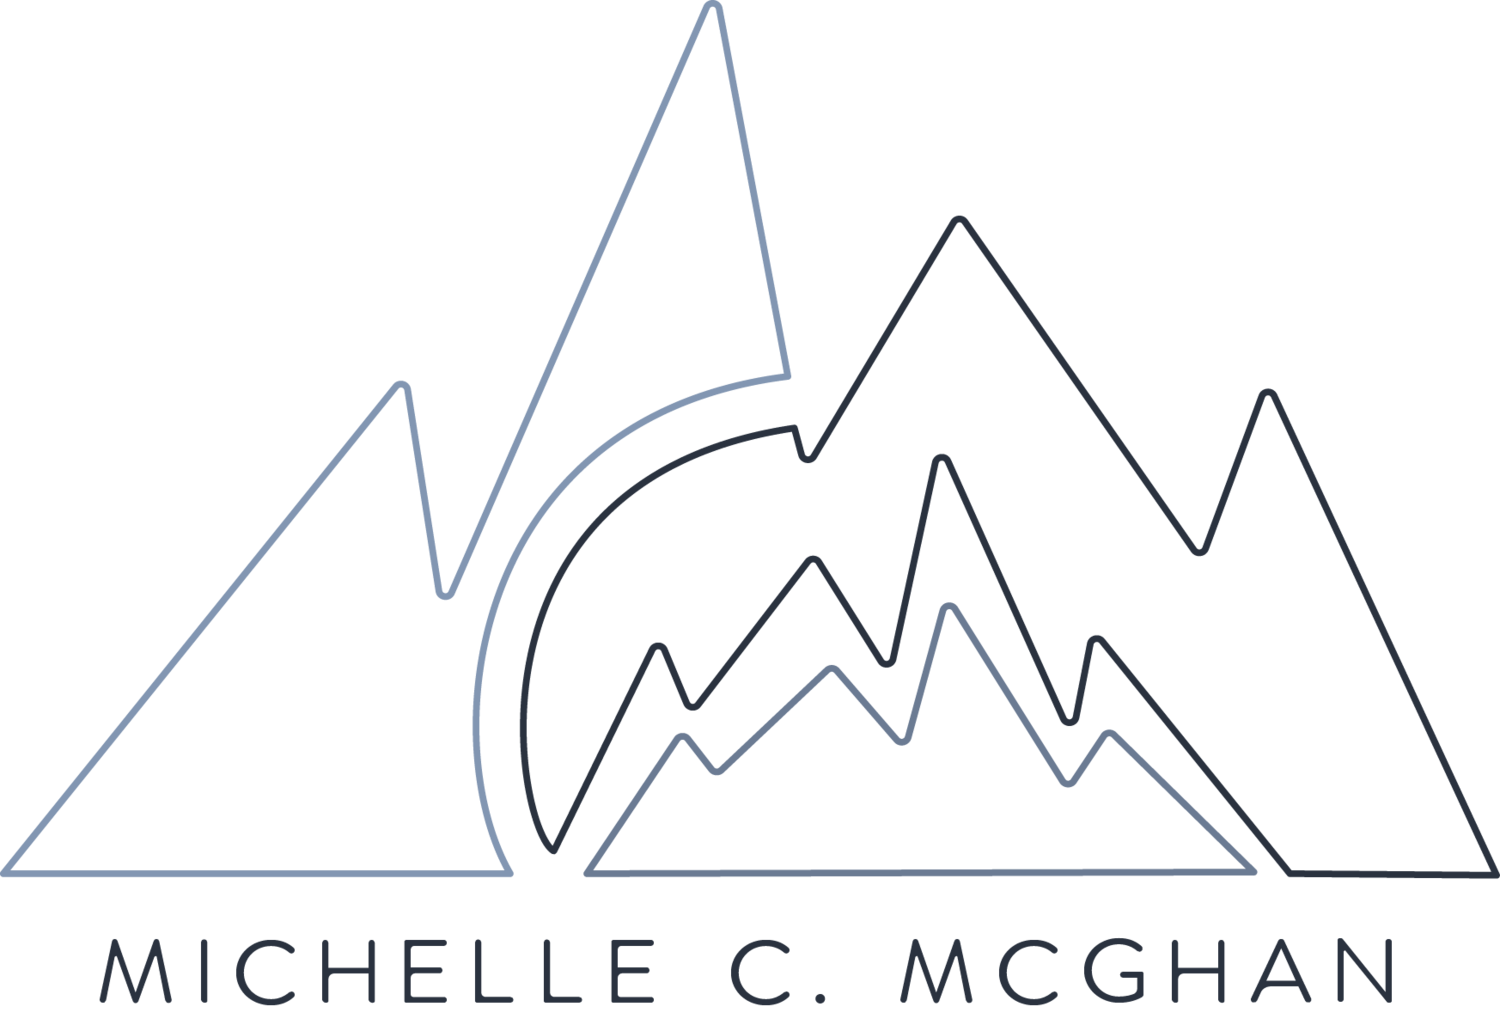 Michelle McGhan